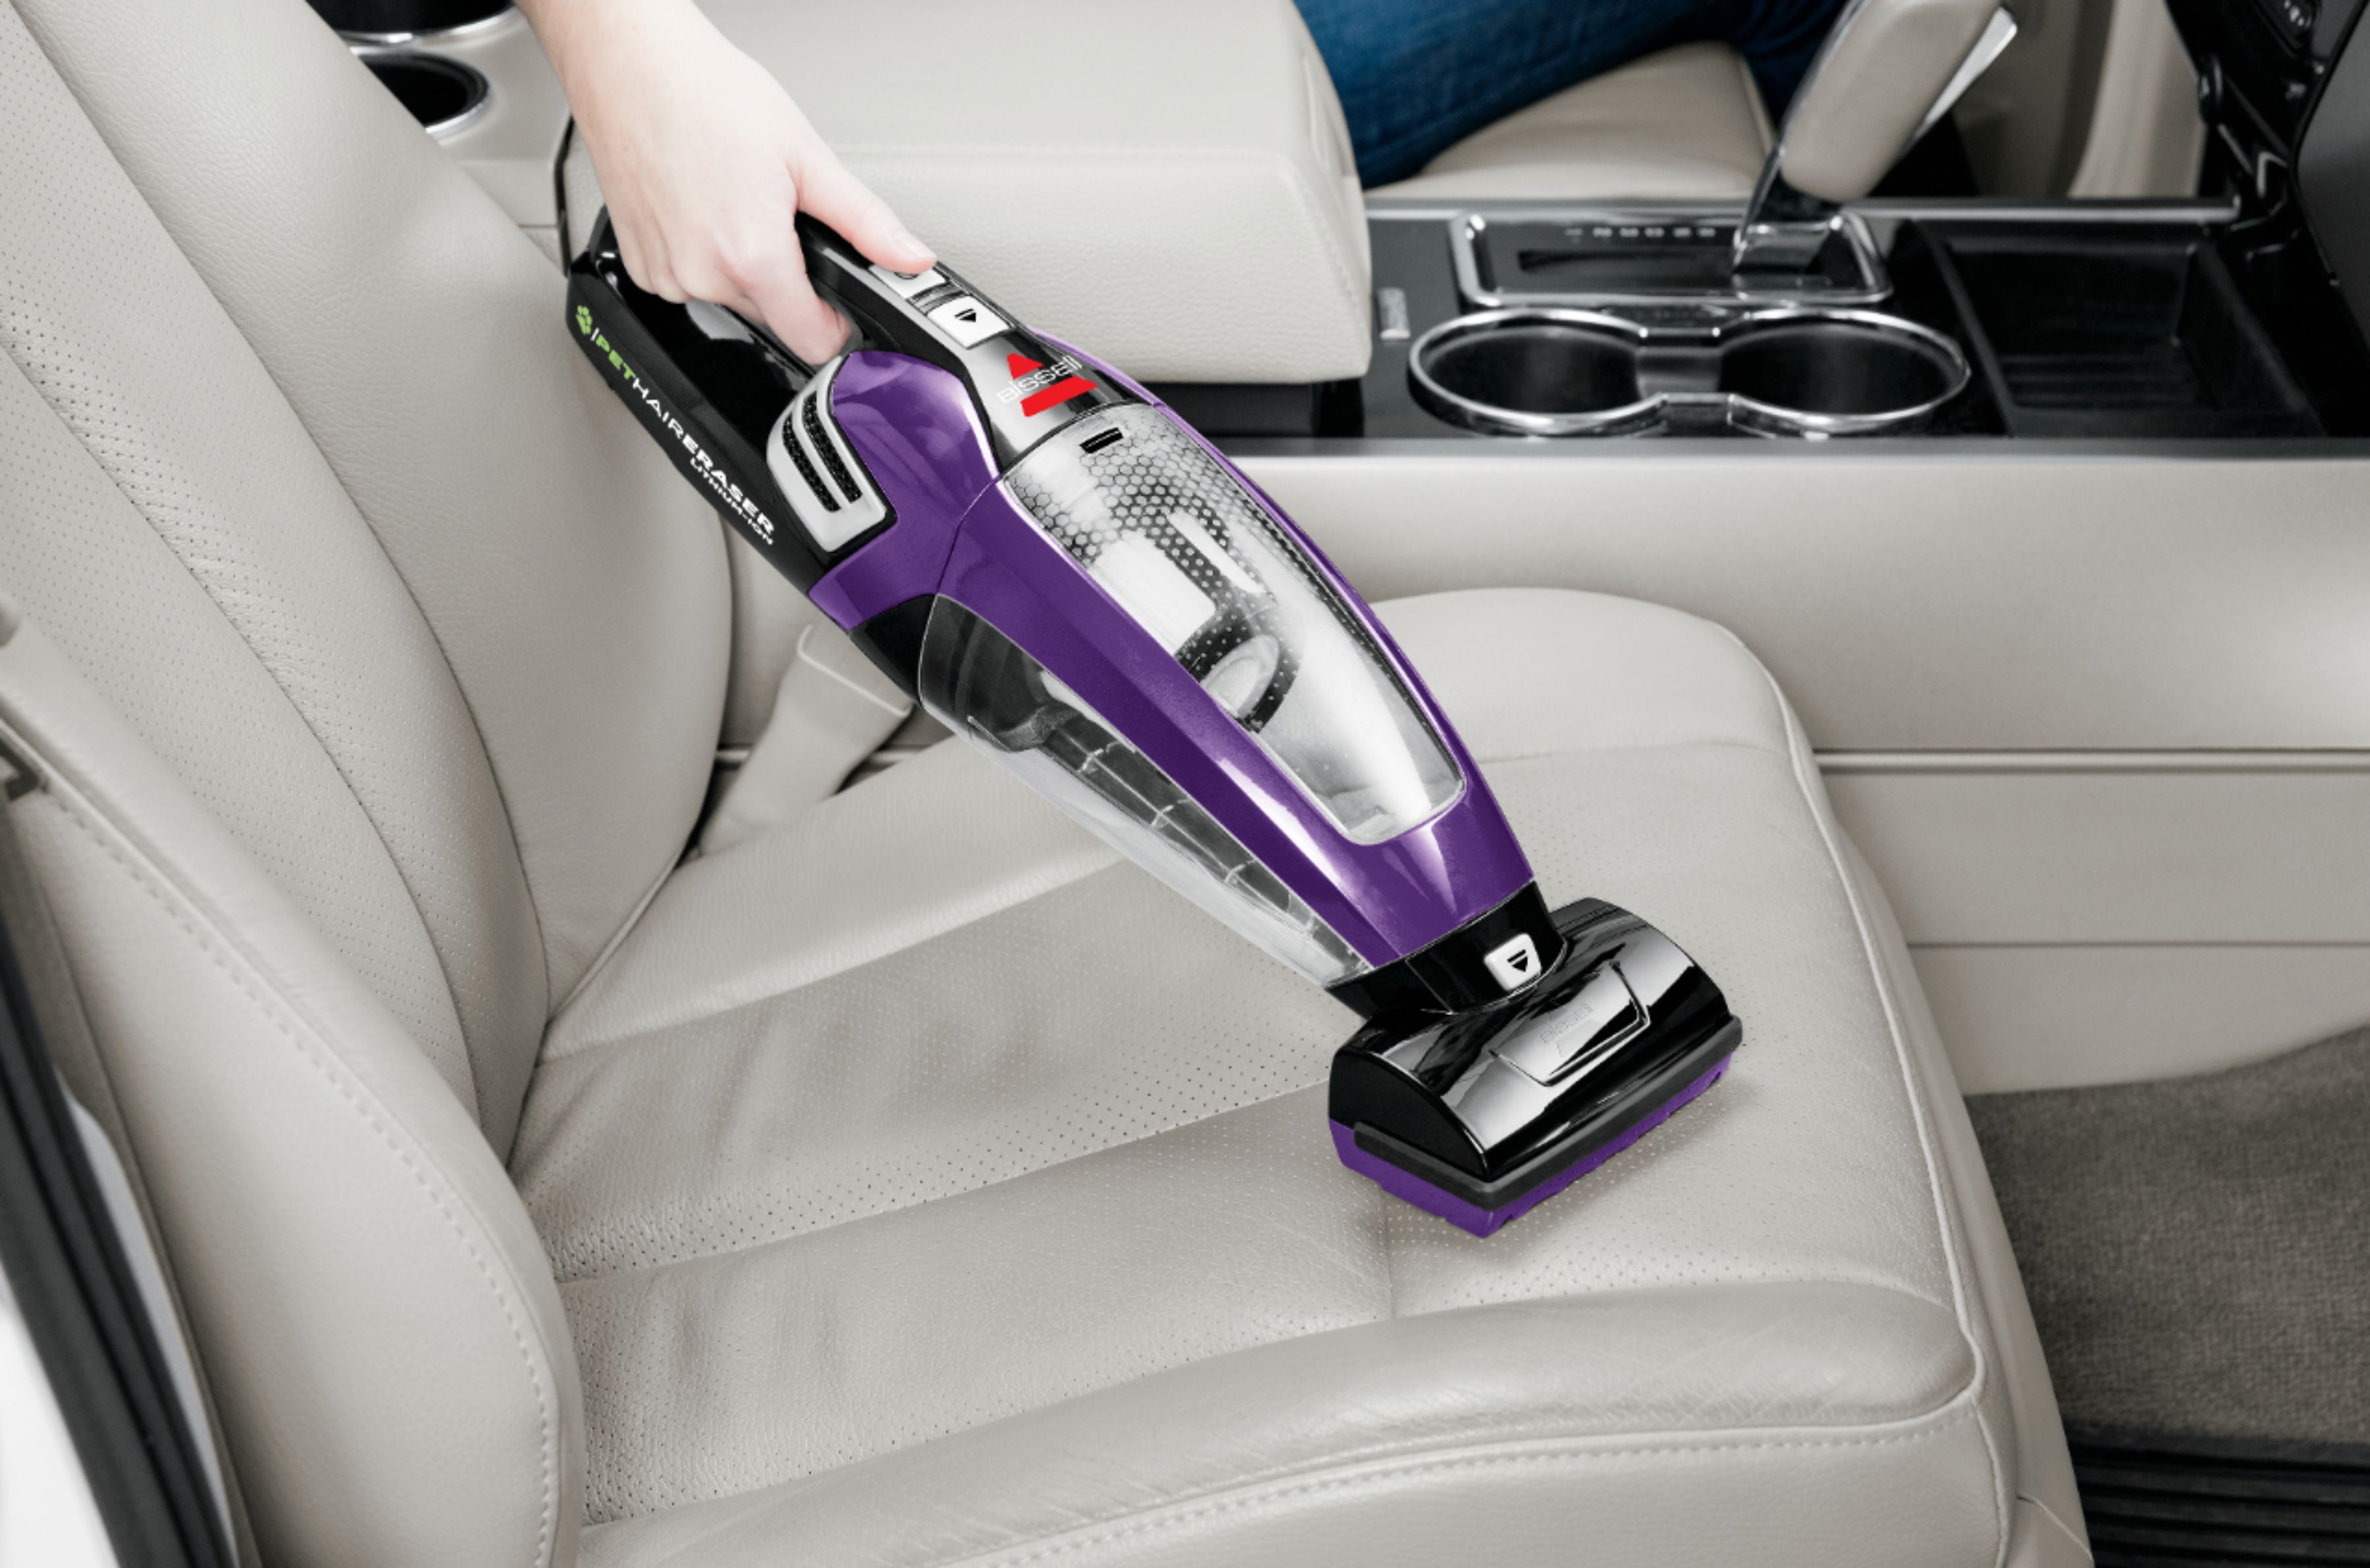 Pet Parents Need This Handheld Vacuum, Bissell Pet Hair Eraser Review